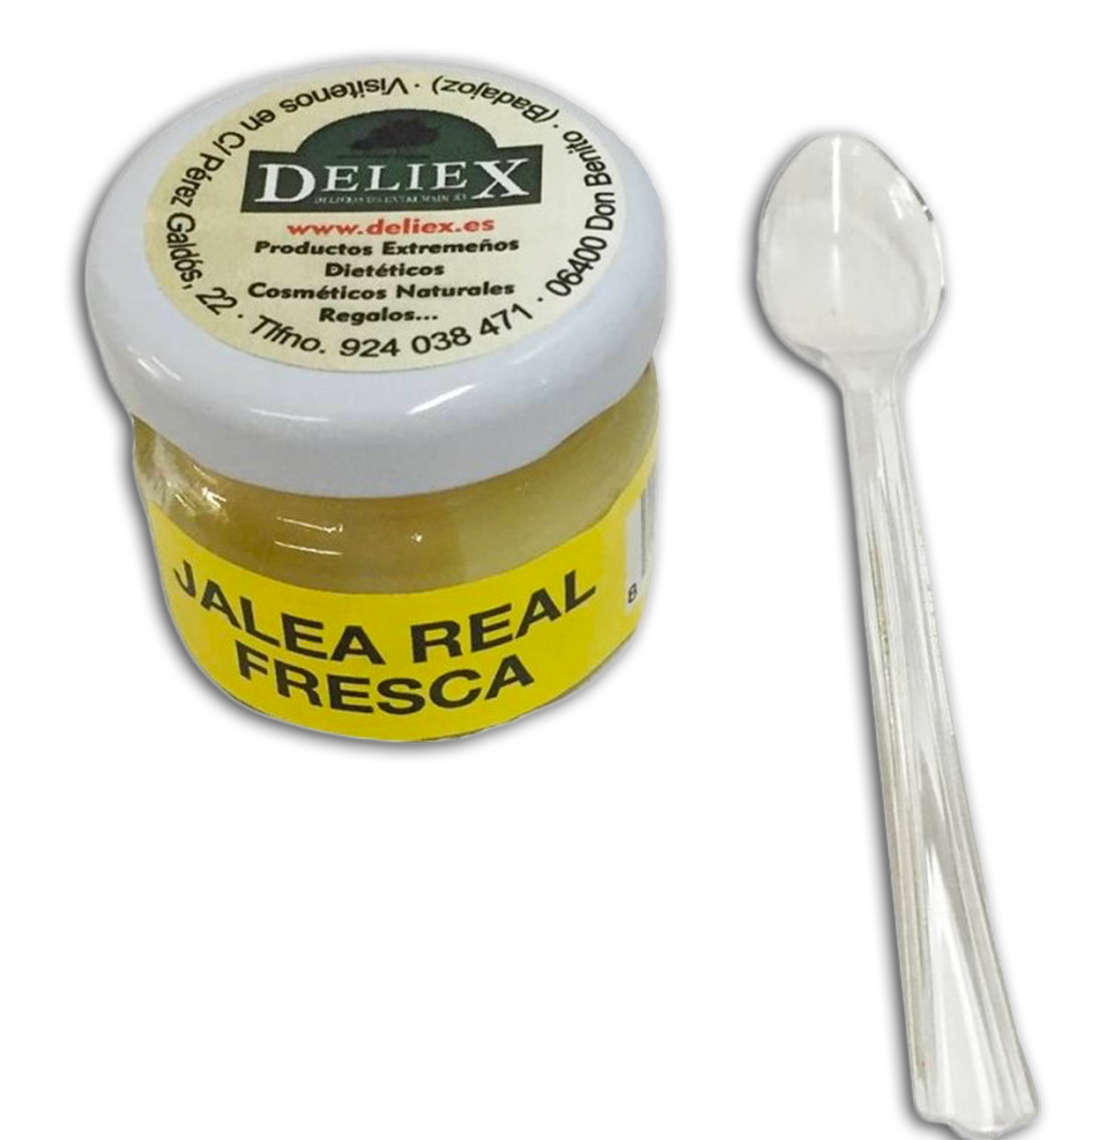 jalea Real Fresca